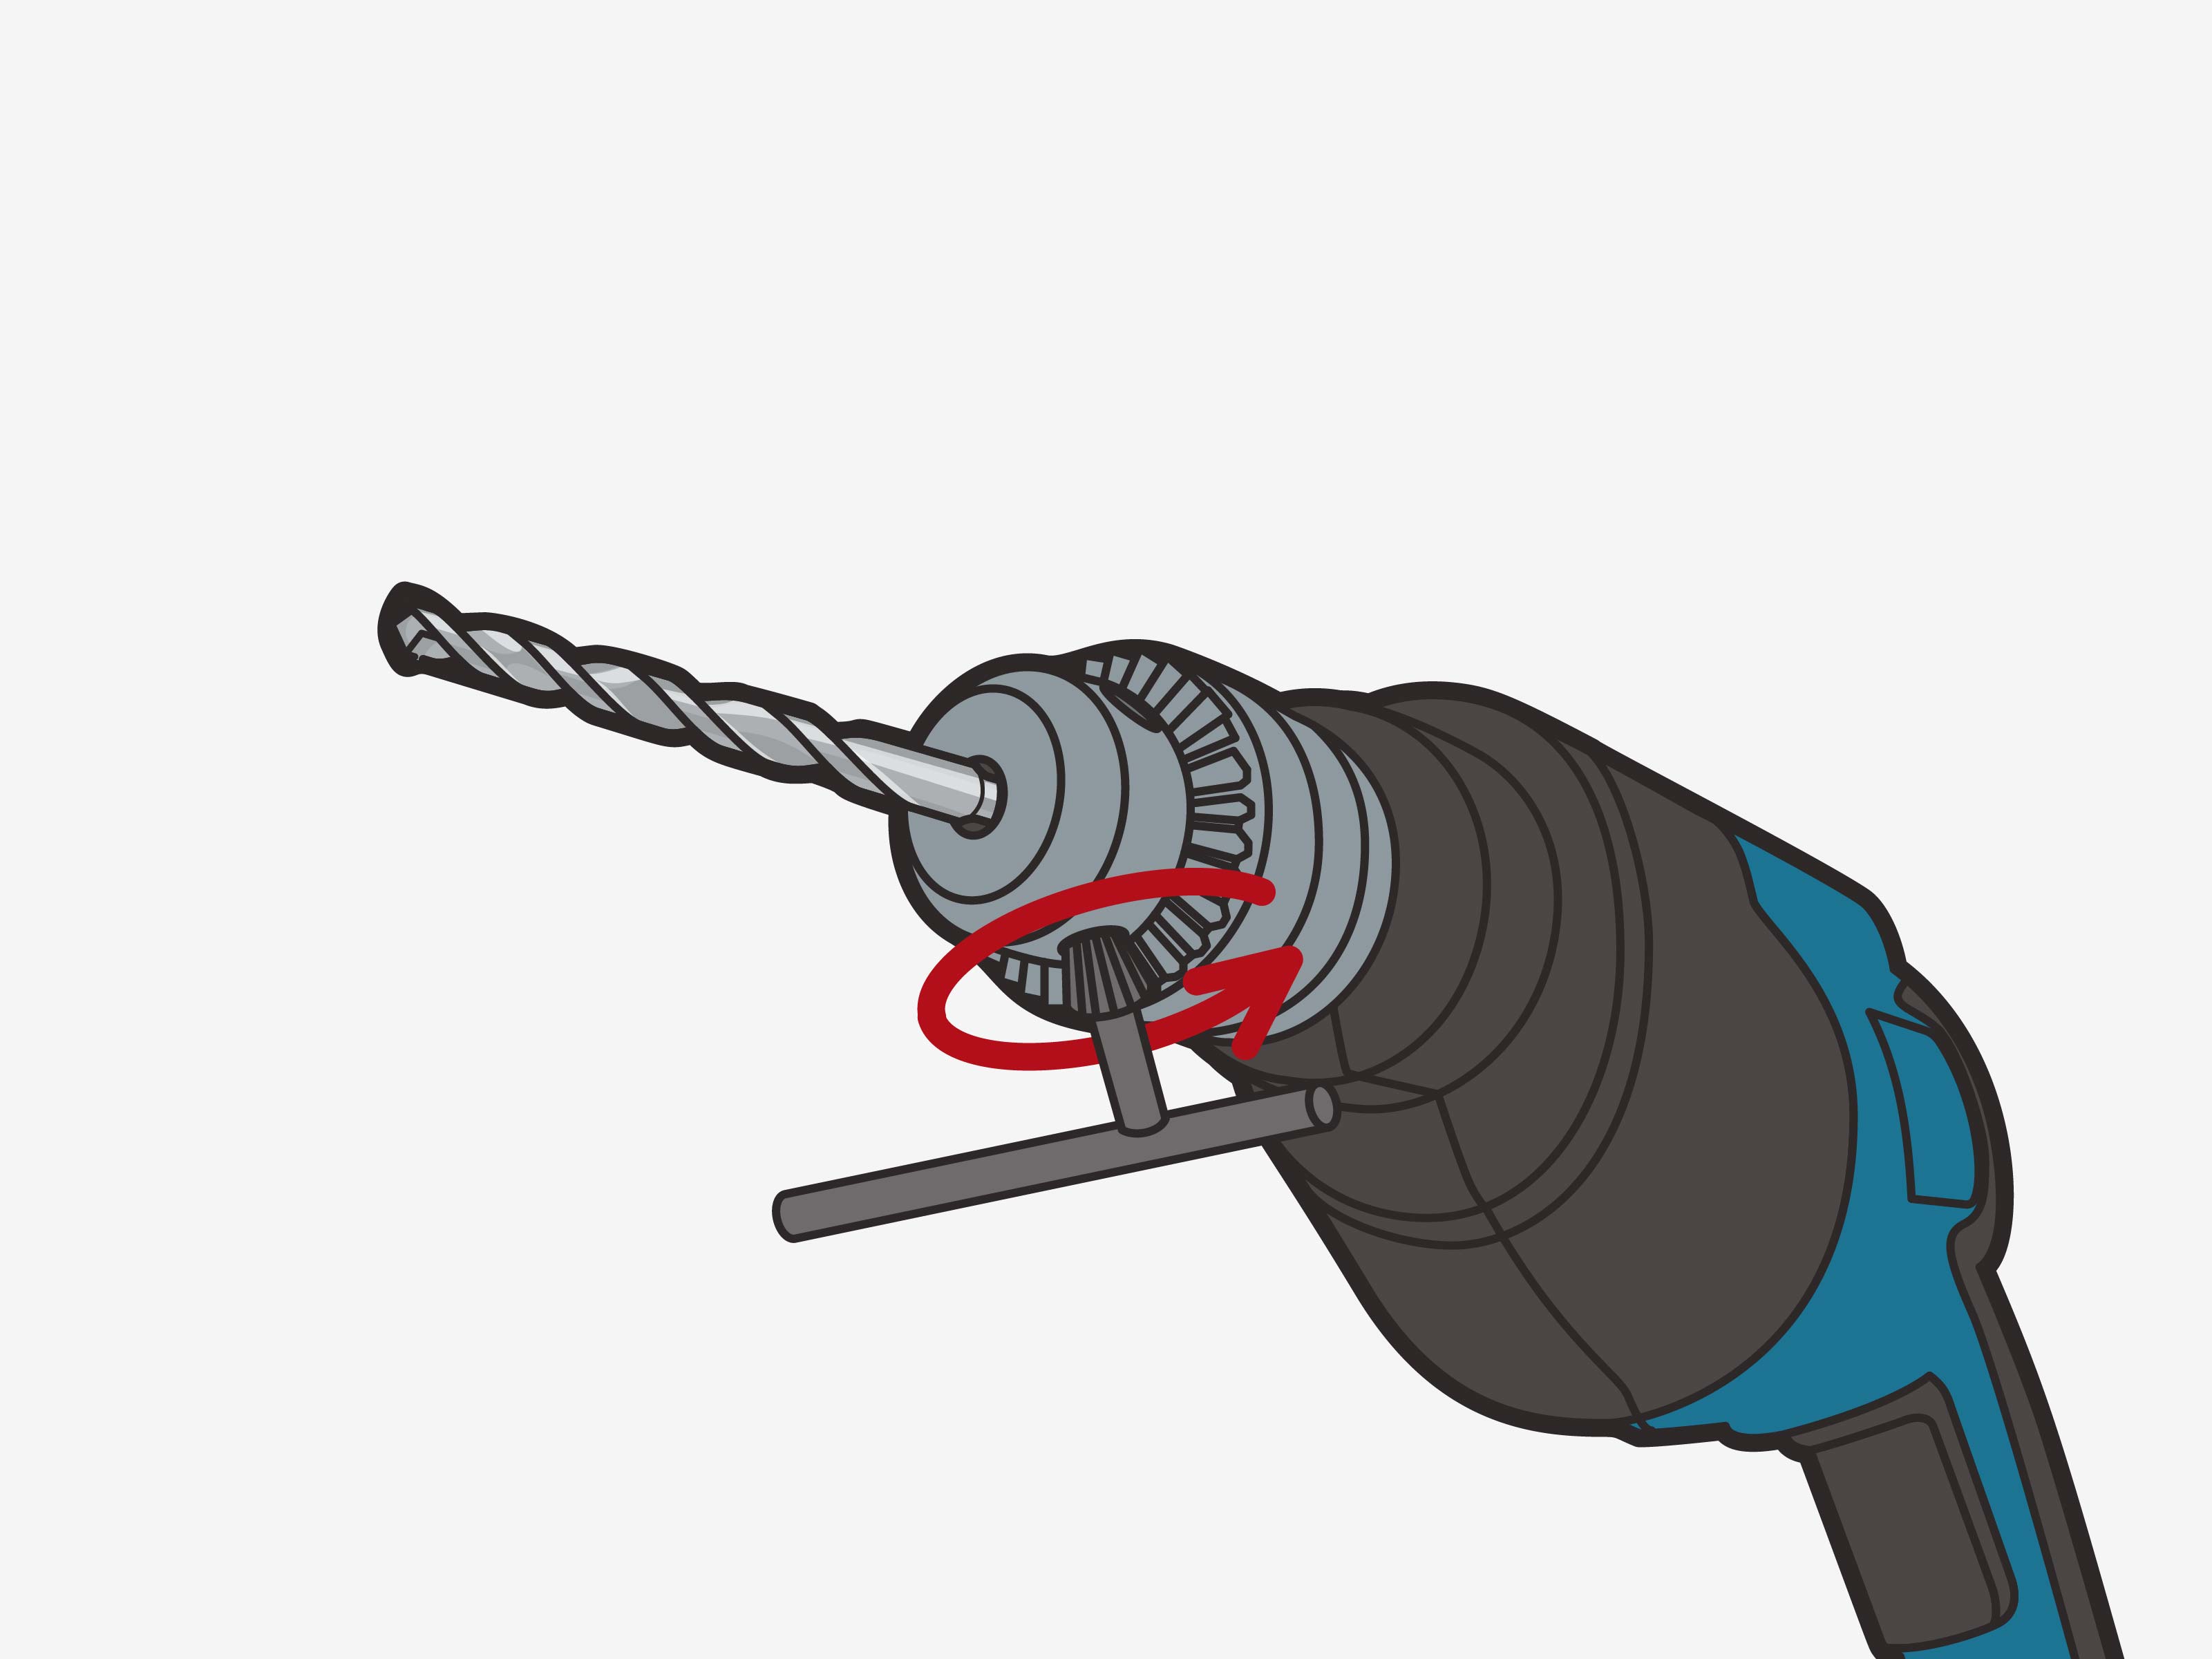 Как закрепить сверло в дрели без ключа - moy-instrument.ru - обзор инструмента и техники